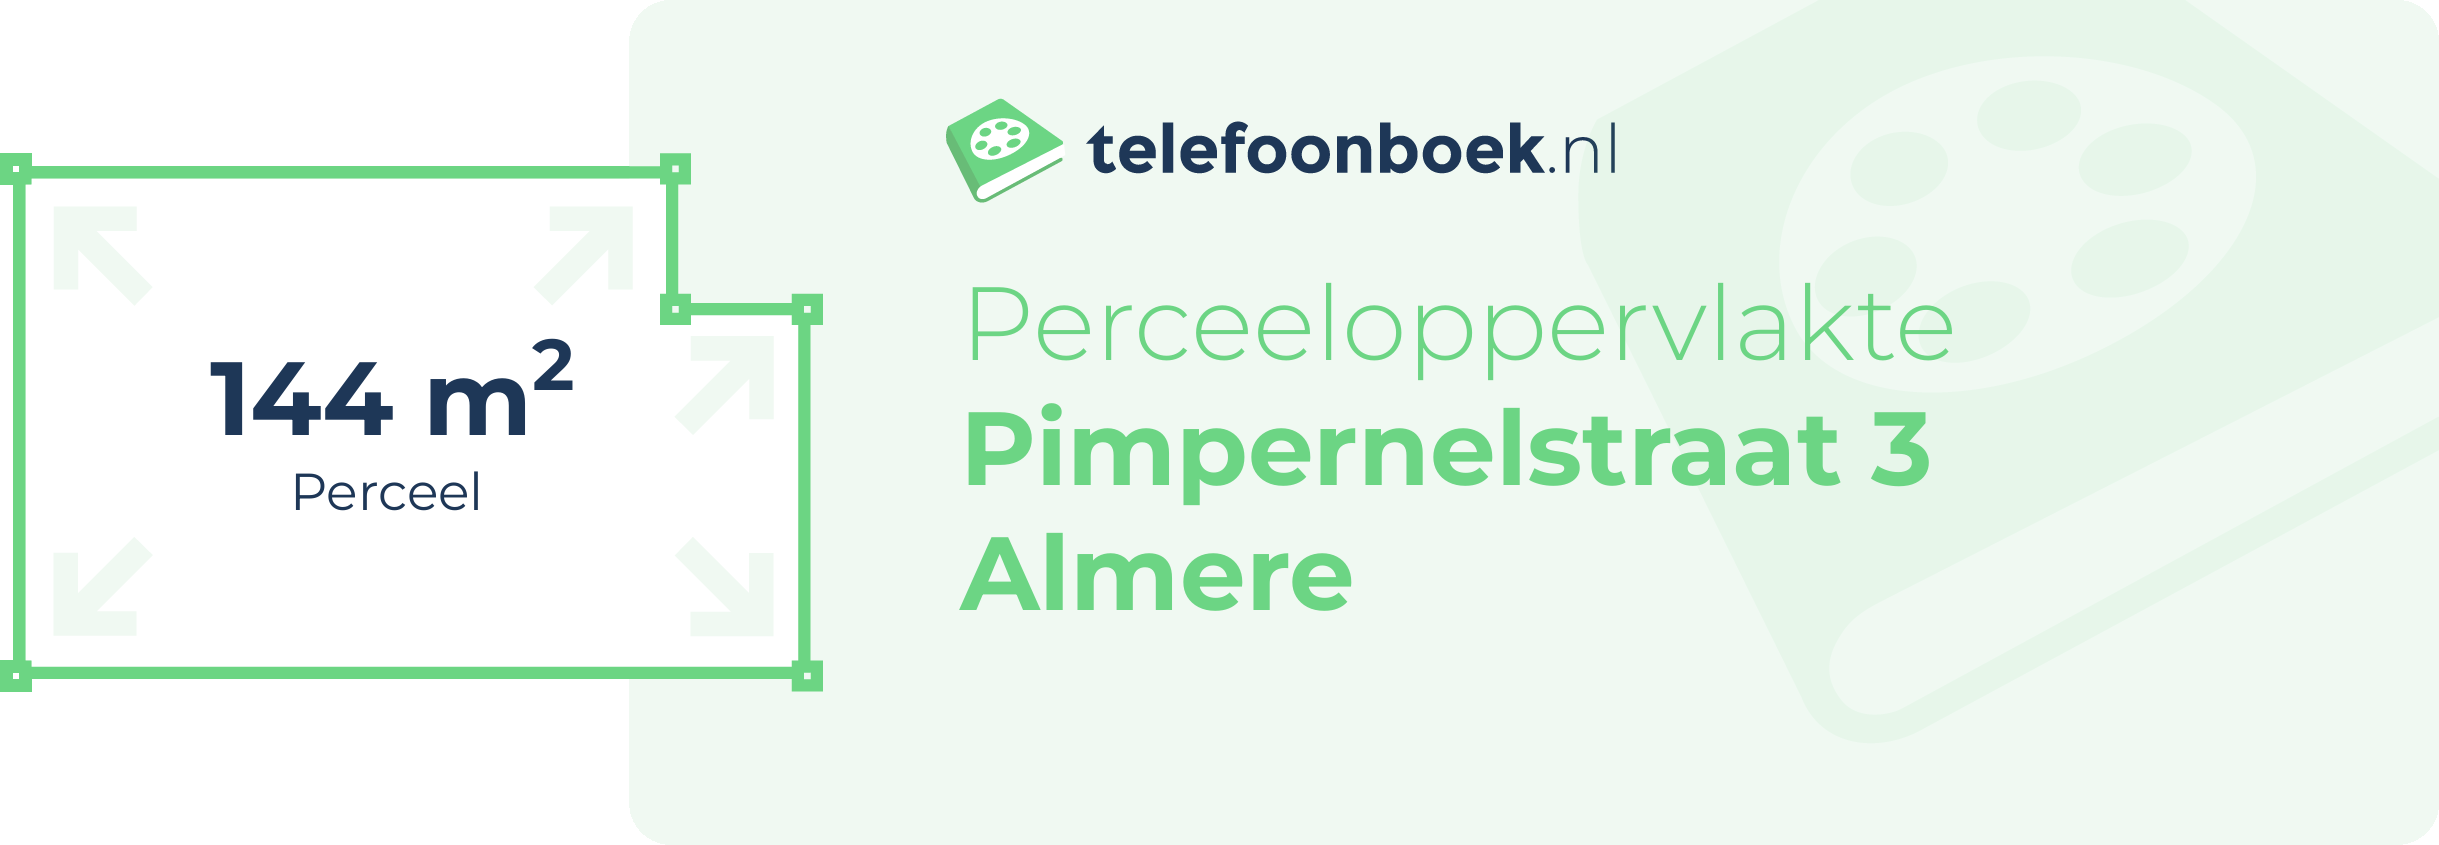 Perceeloppervlakte Pimpernelstraat 3 Almere